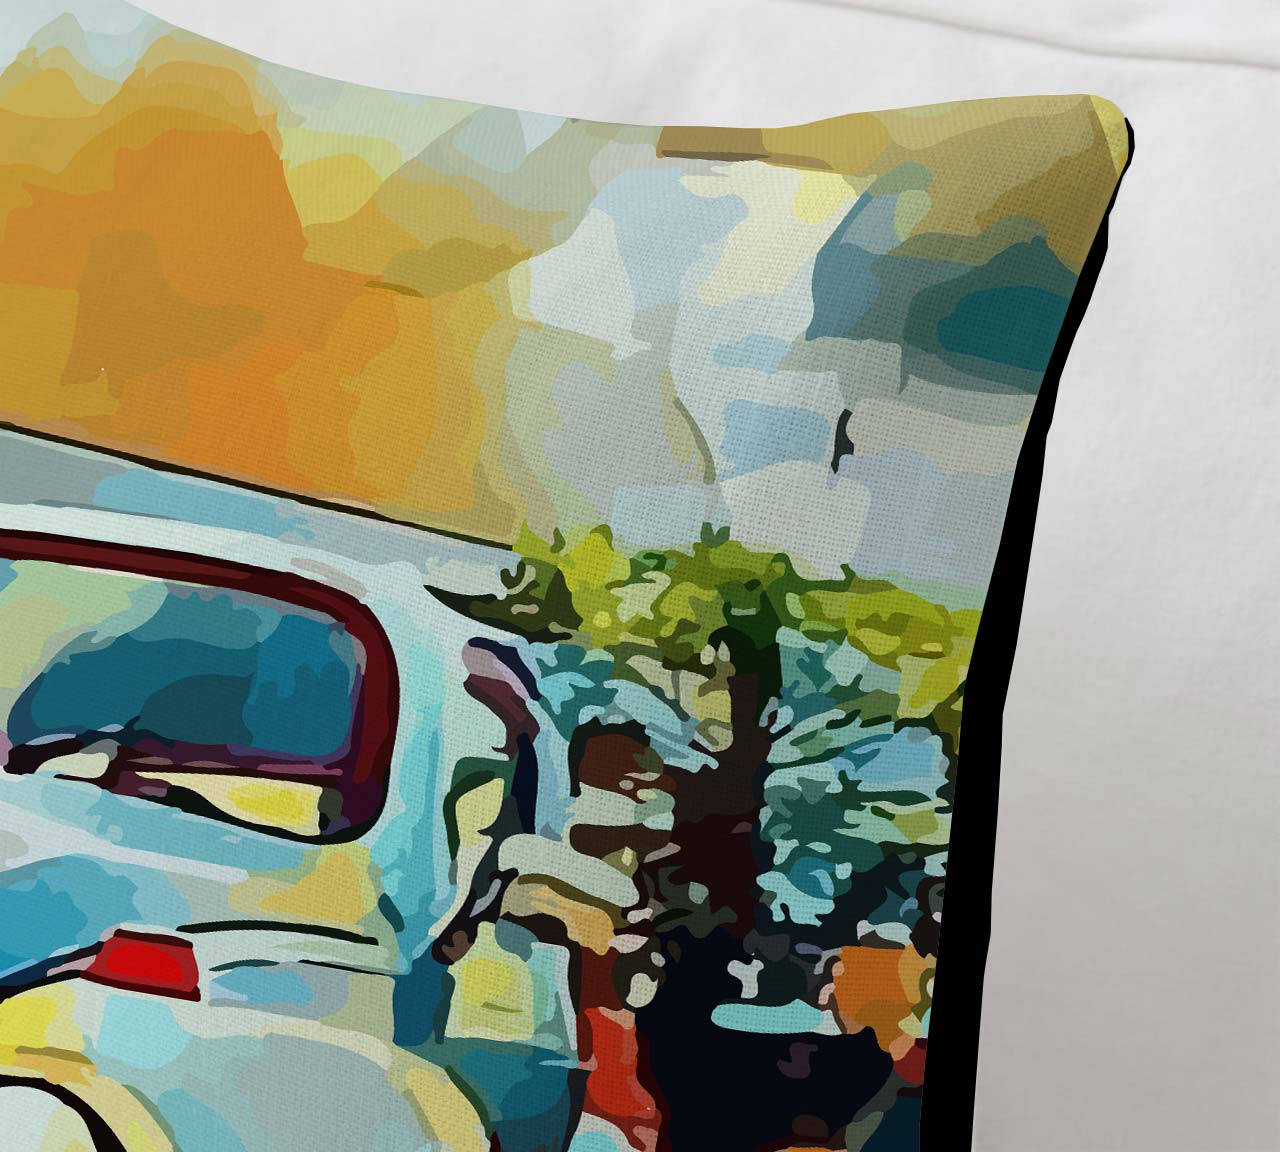 Volkswagen Art Cushion Cover Trendy Home